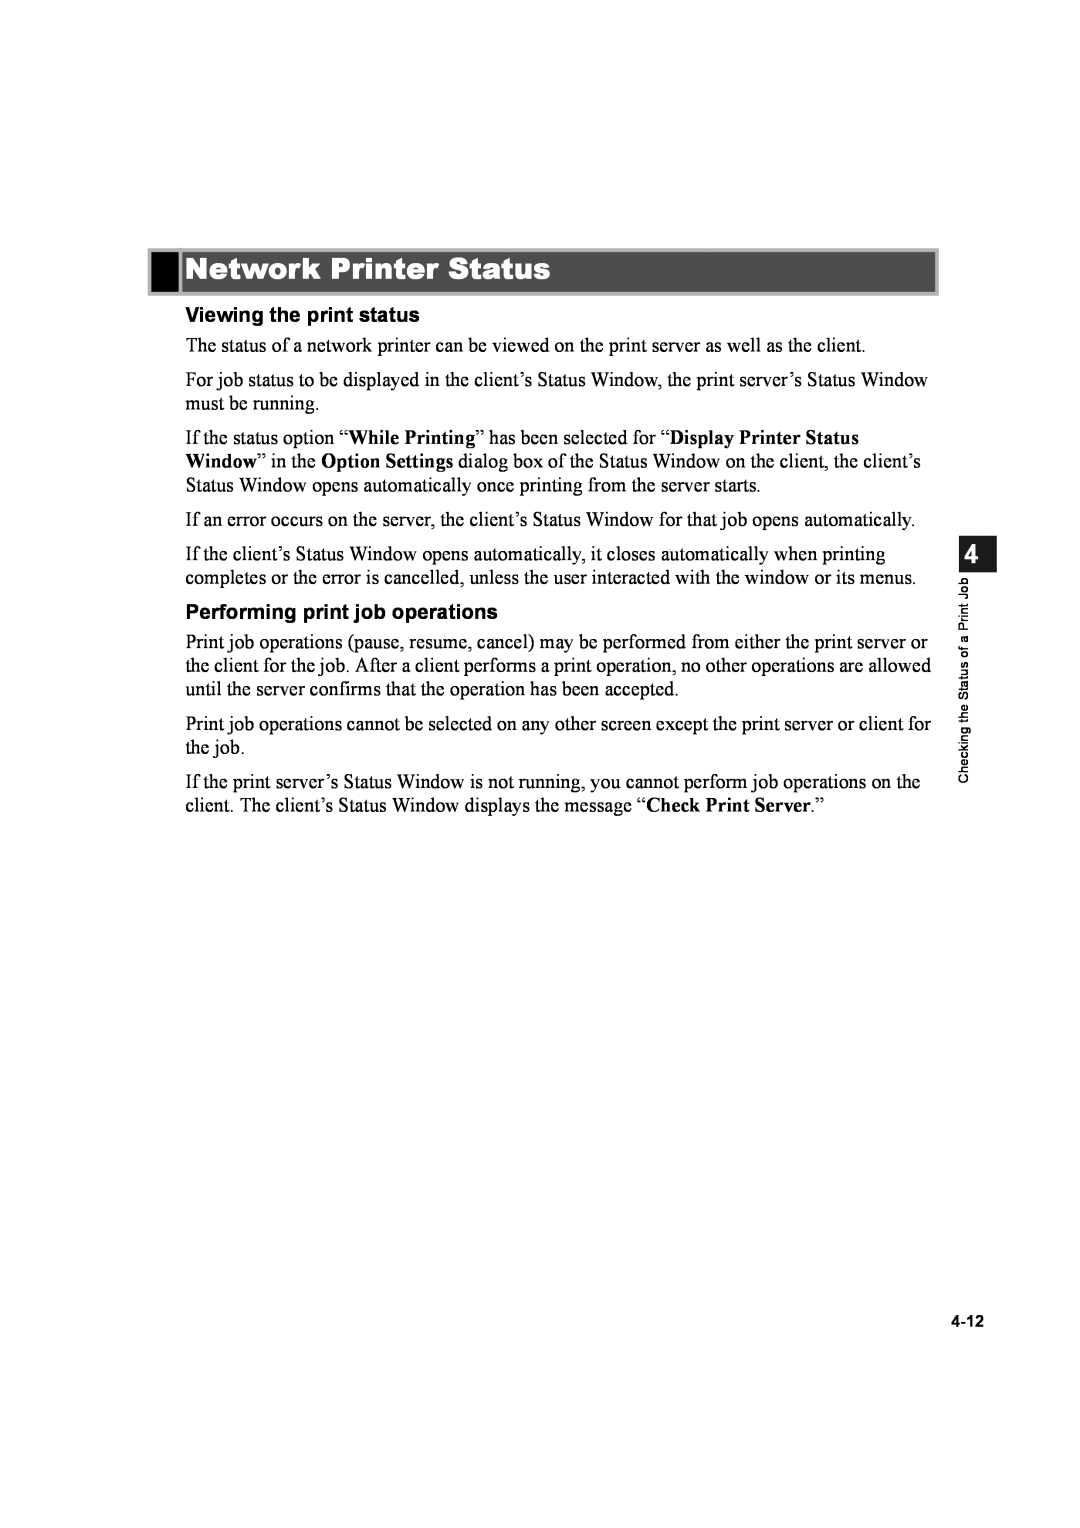 Canon D600 manual Network Printer Status, Viewing the print status, Performing print job operations 